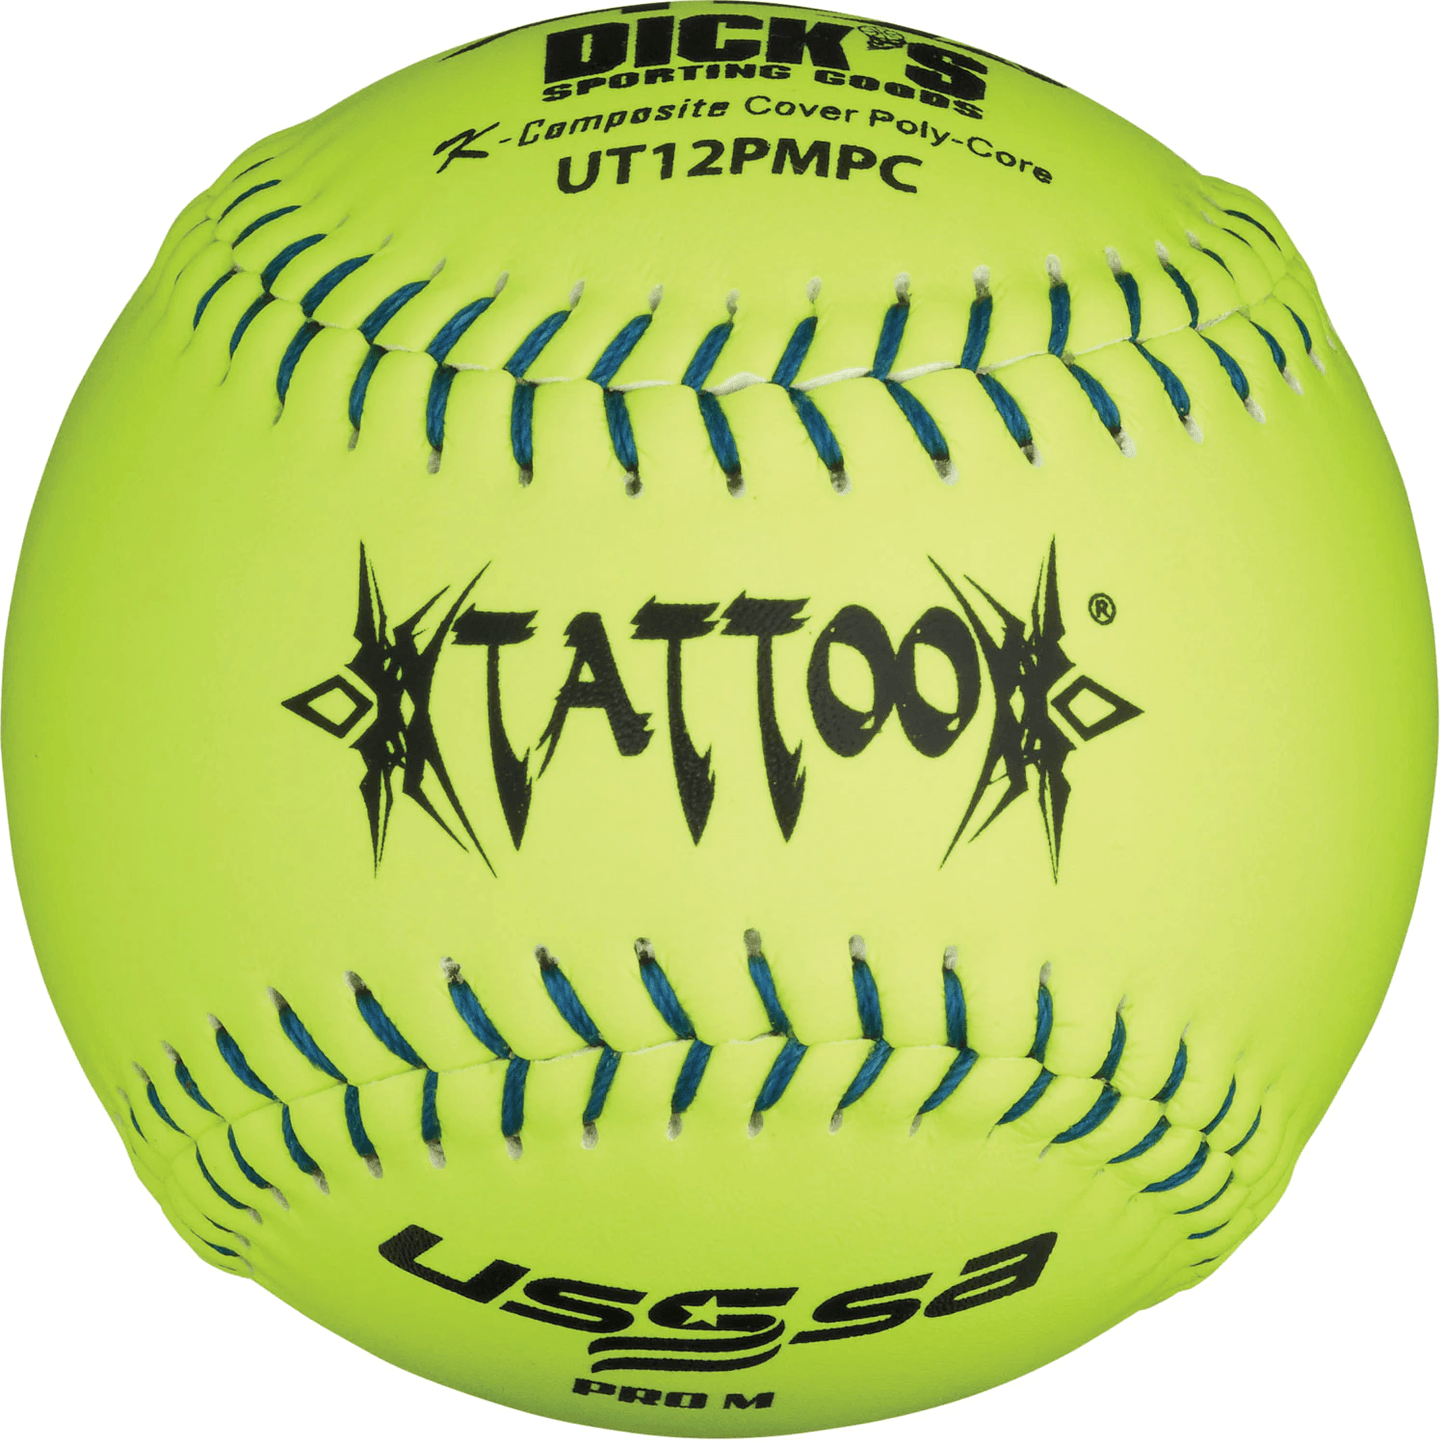 AD Starr Tattoo Pro M USSSA 12 Composite Slowpitch Softballs - UT12PMPC